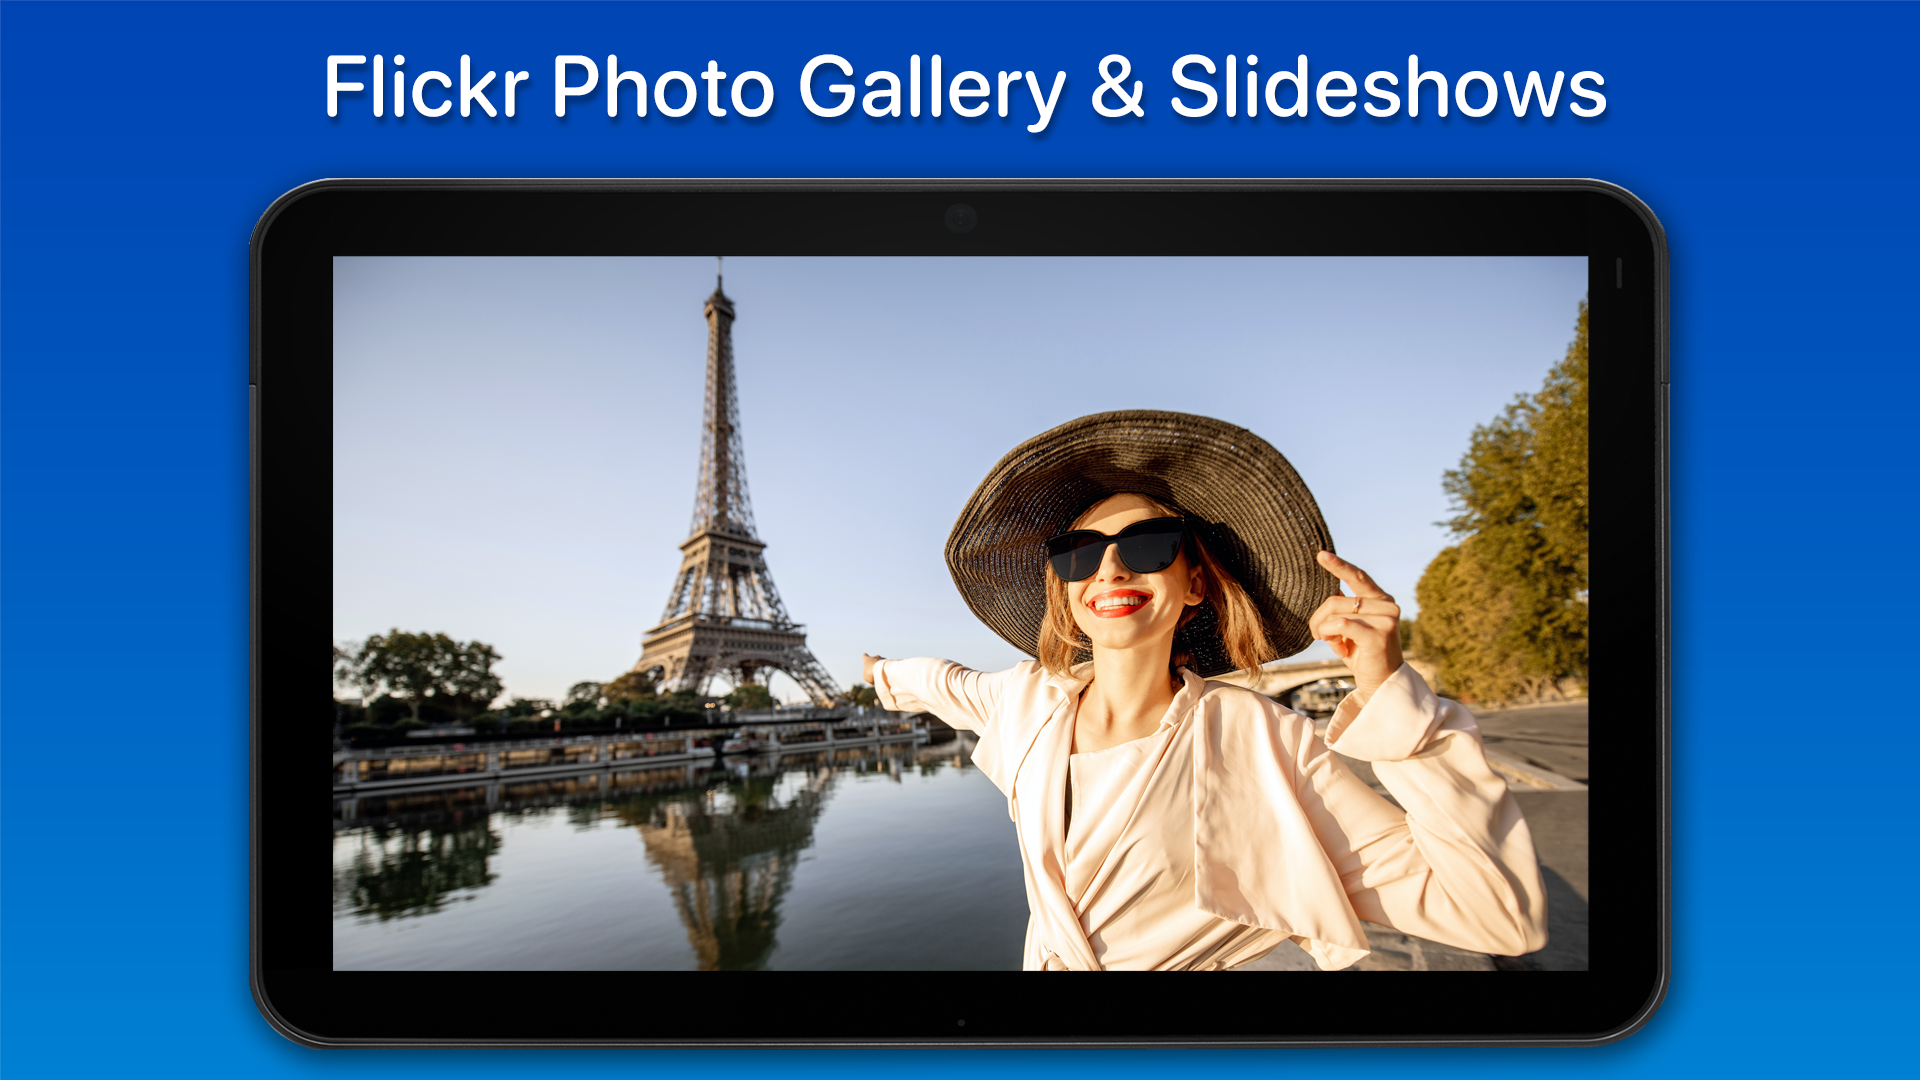 FlickFolio - Flickr Photos & Slideshows